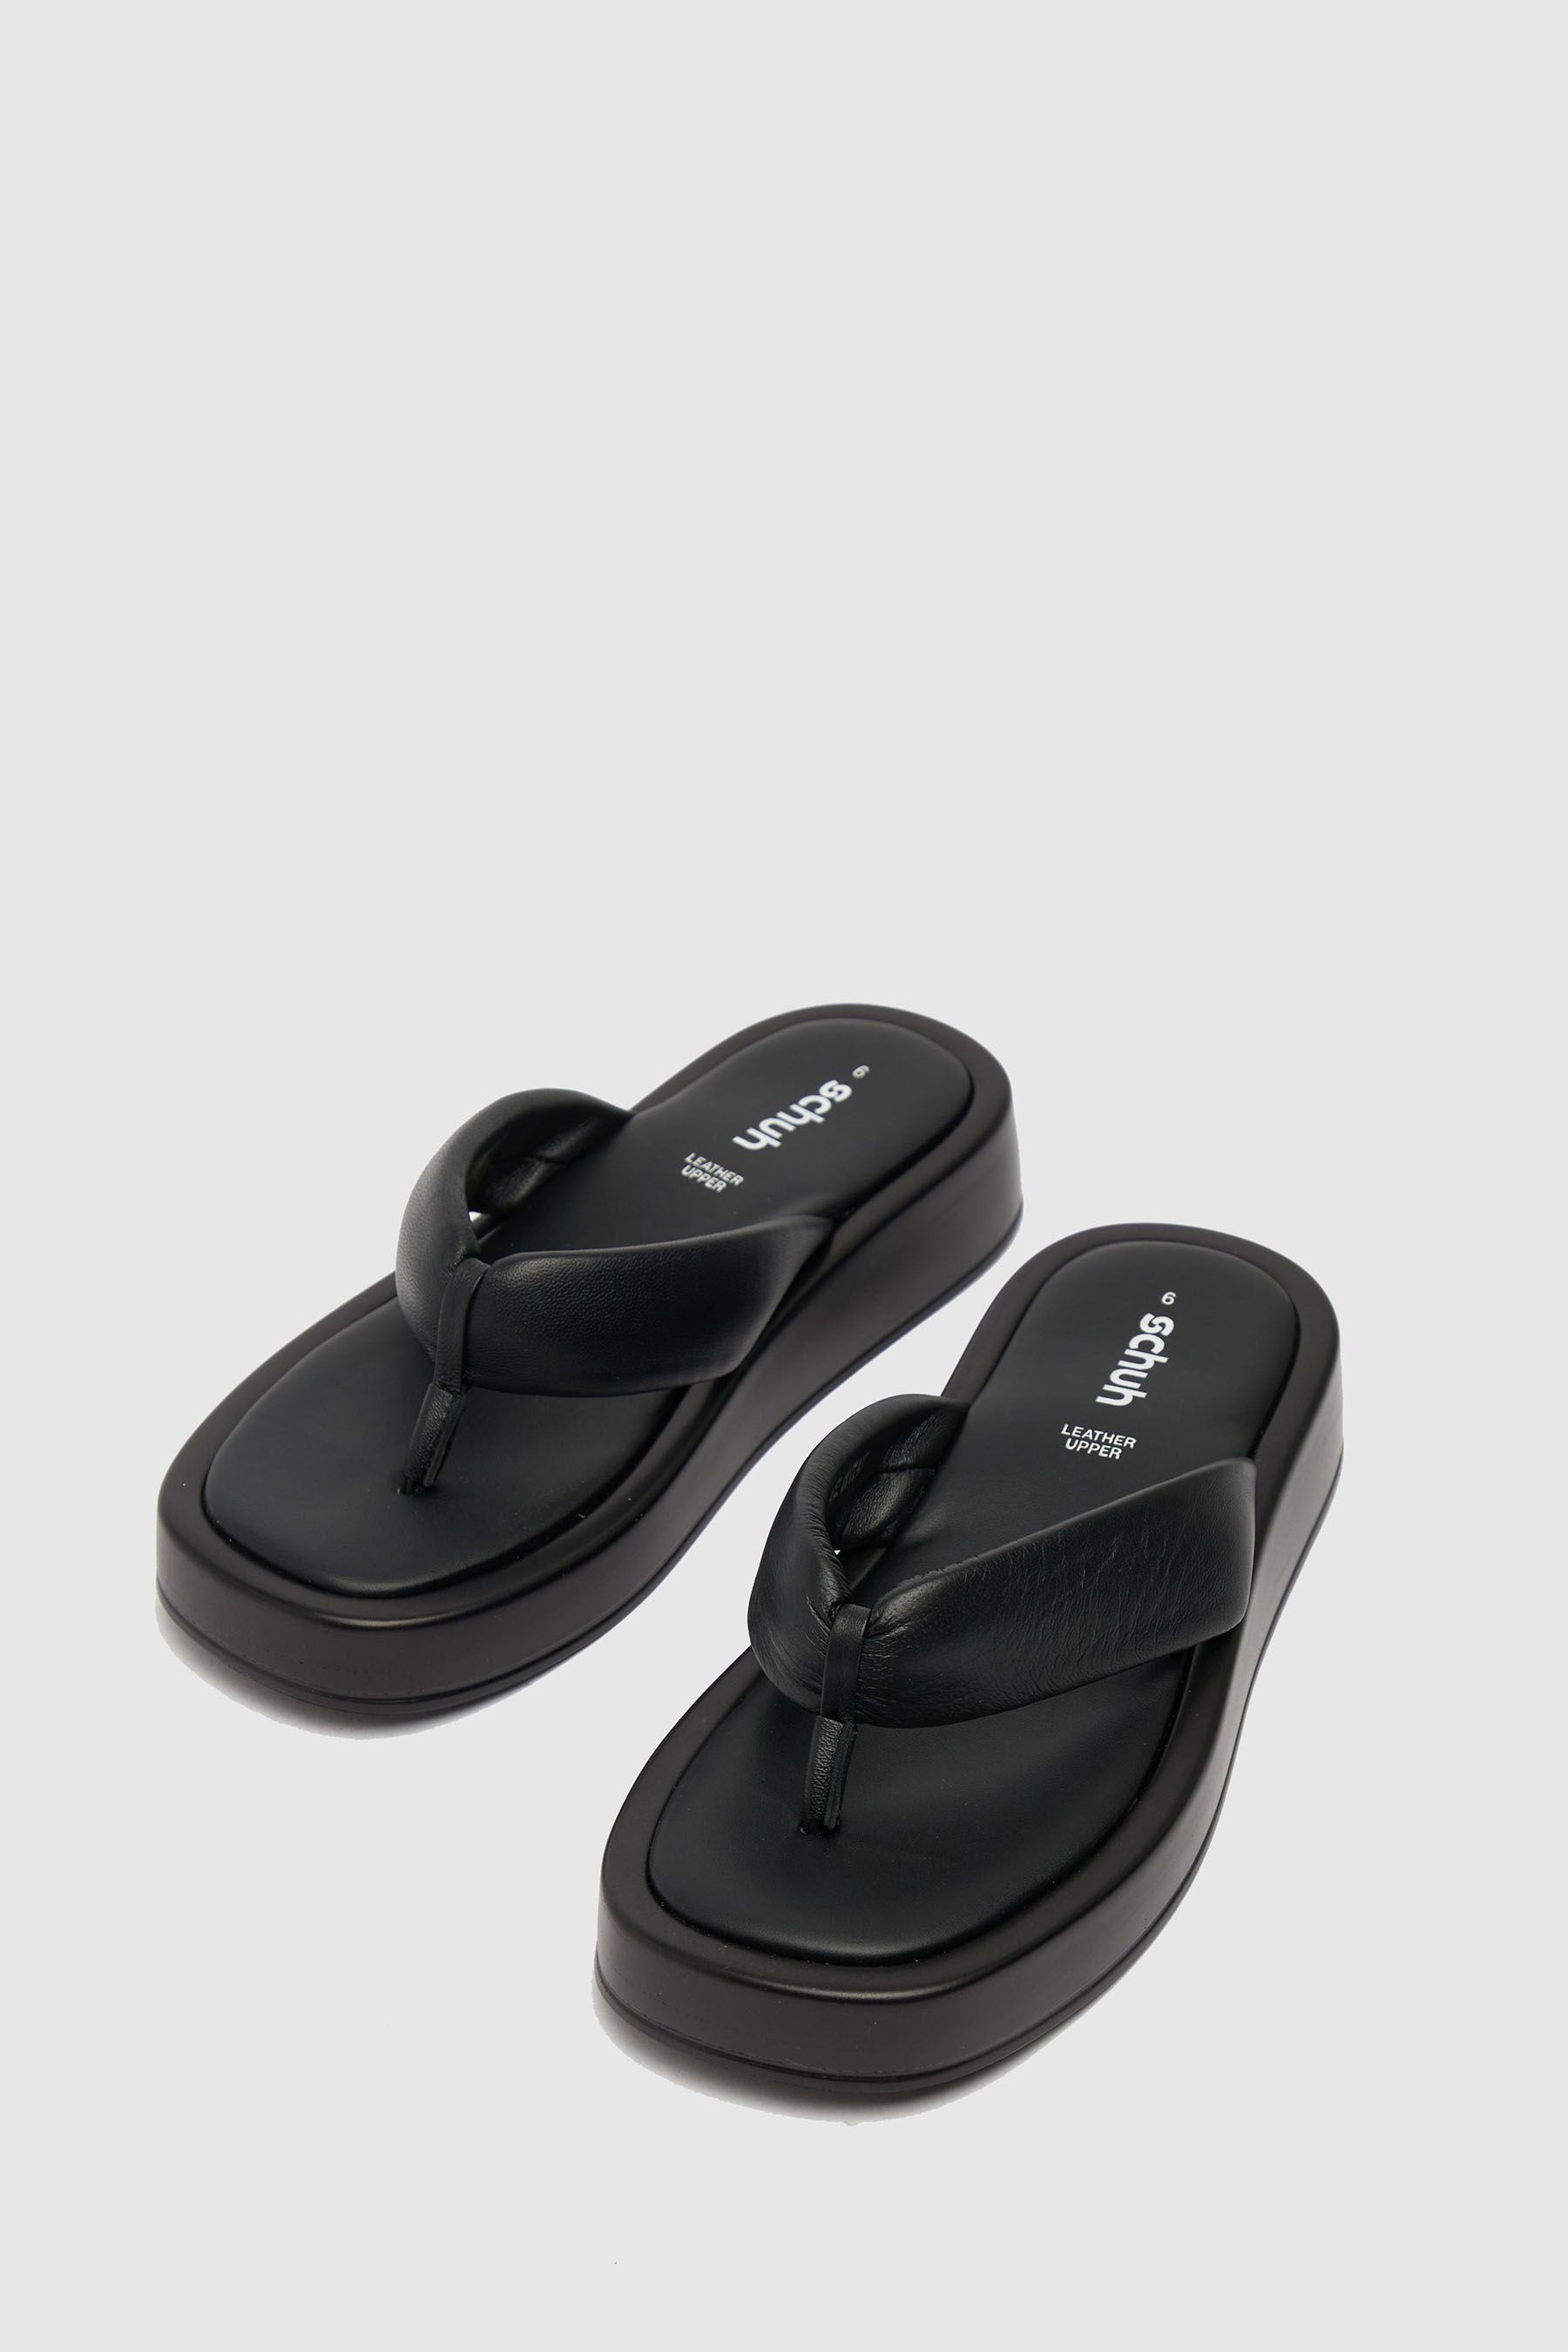 Buy Schuh Tonya Flatform Black Toe Thong from the Next UK online shop